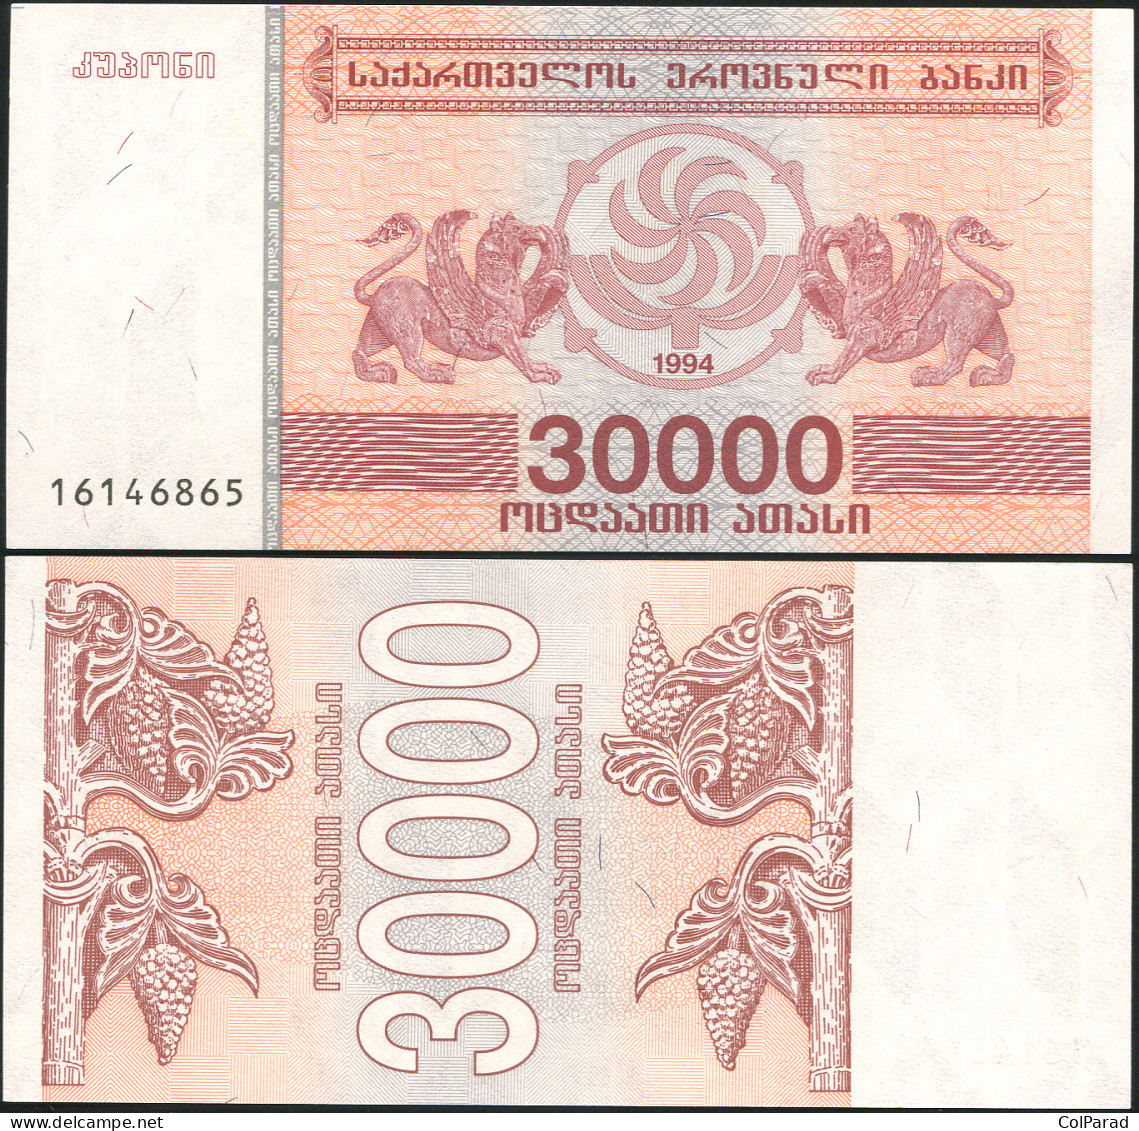 GEORGIA 30000 LARI - 1994 - Paper Unc - P.47a Banknote - Georgia